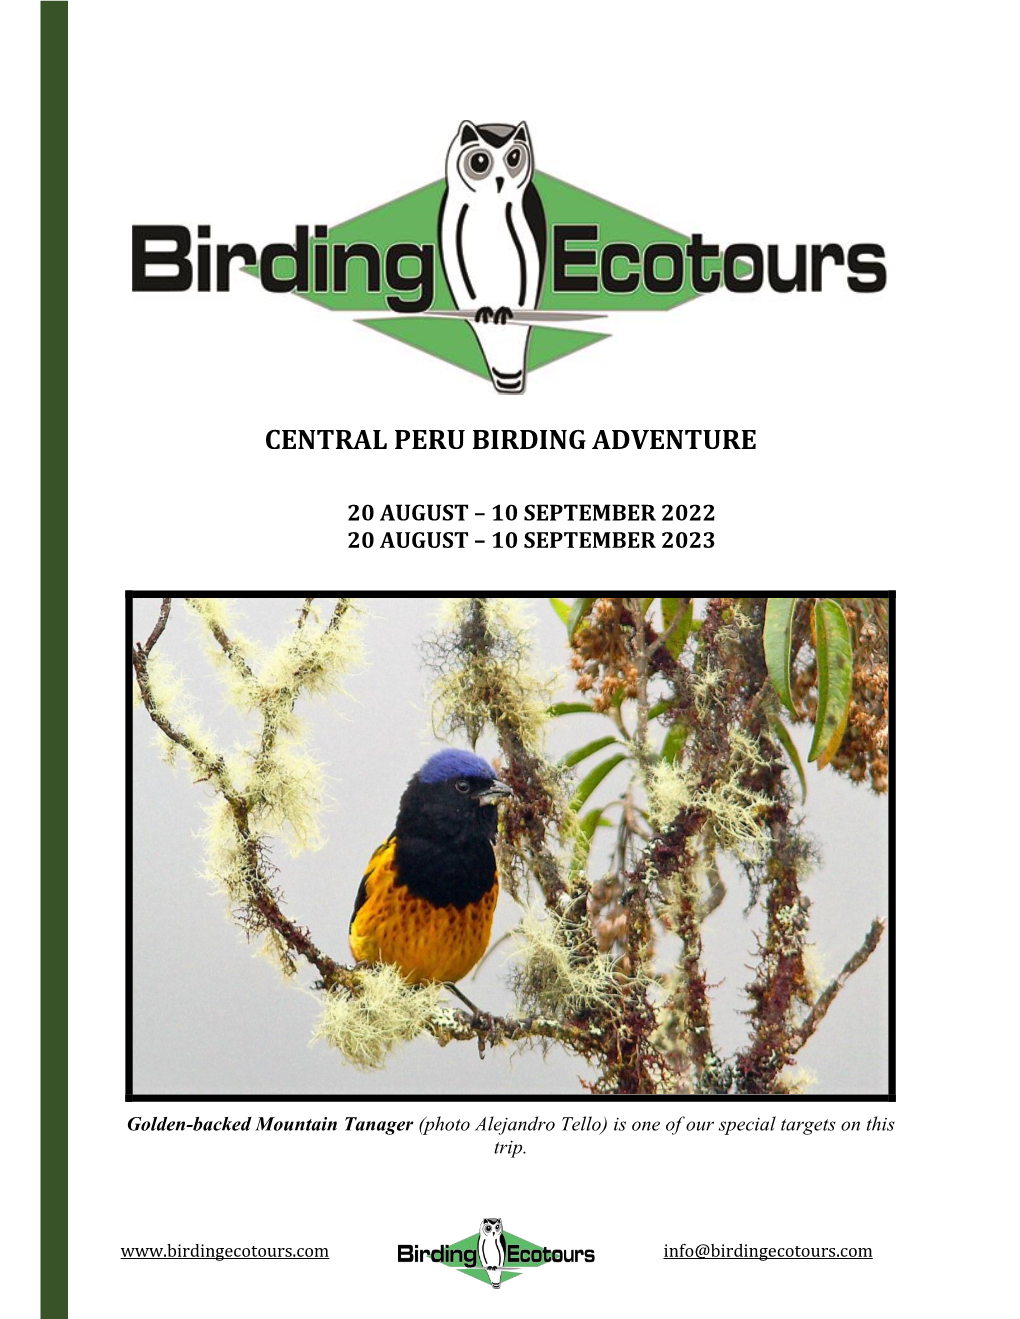 Central Peru Birding Adventure